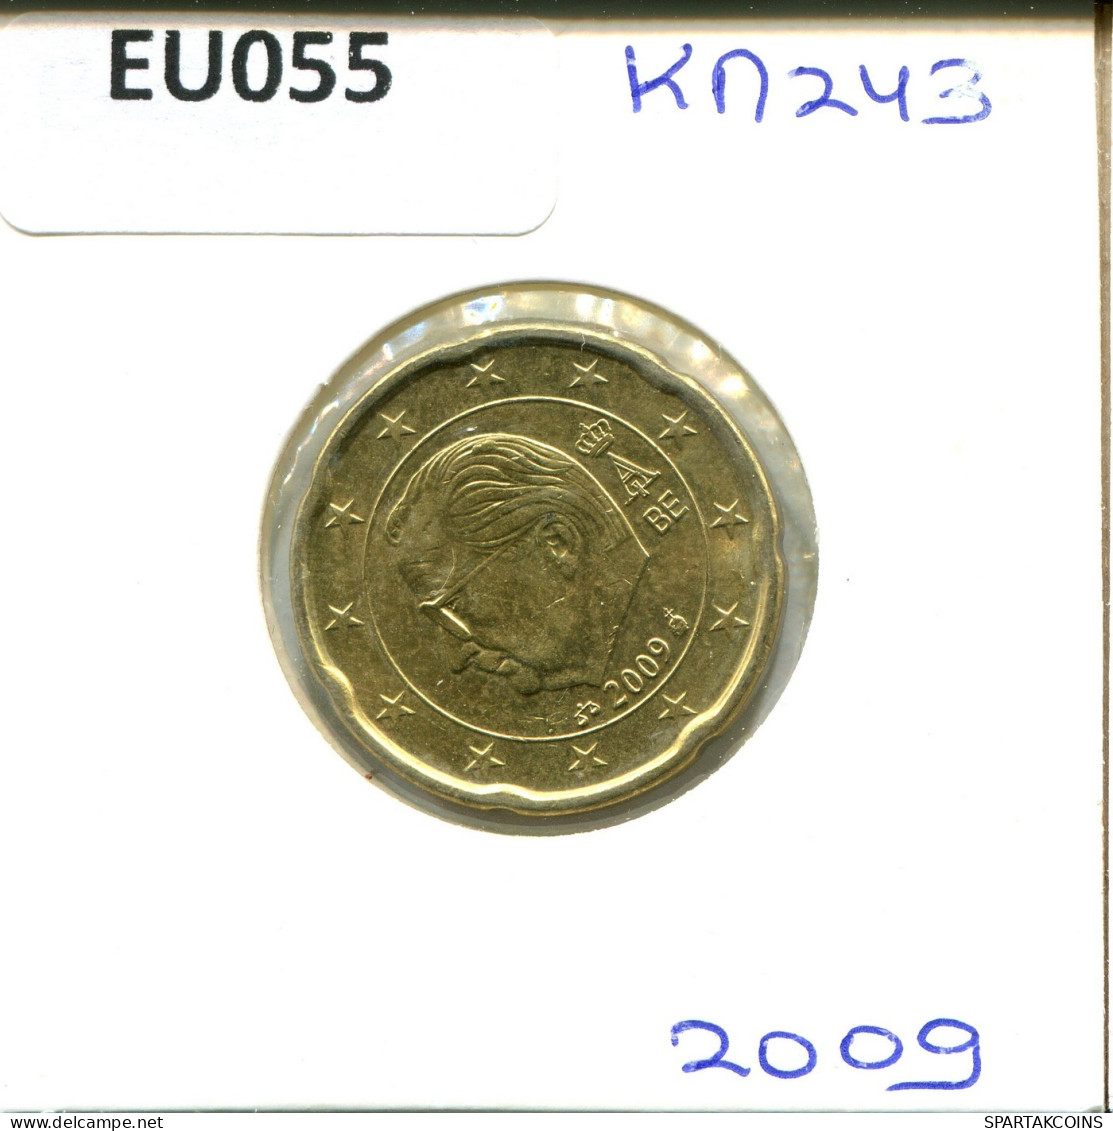 20 EURO CENTS 2009 BELGIQUE BELGIUM Pièce #EU055.F.A - Belgique